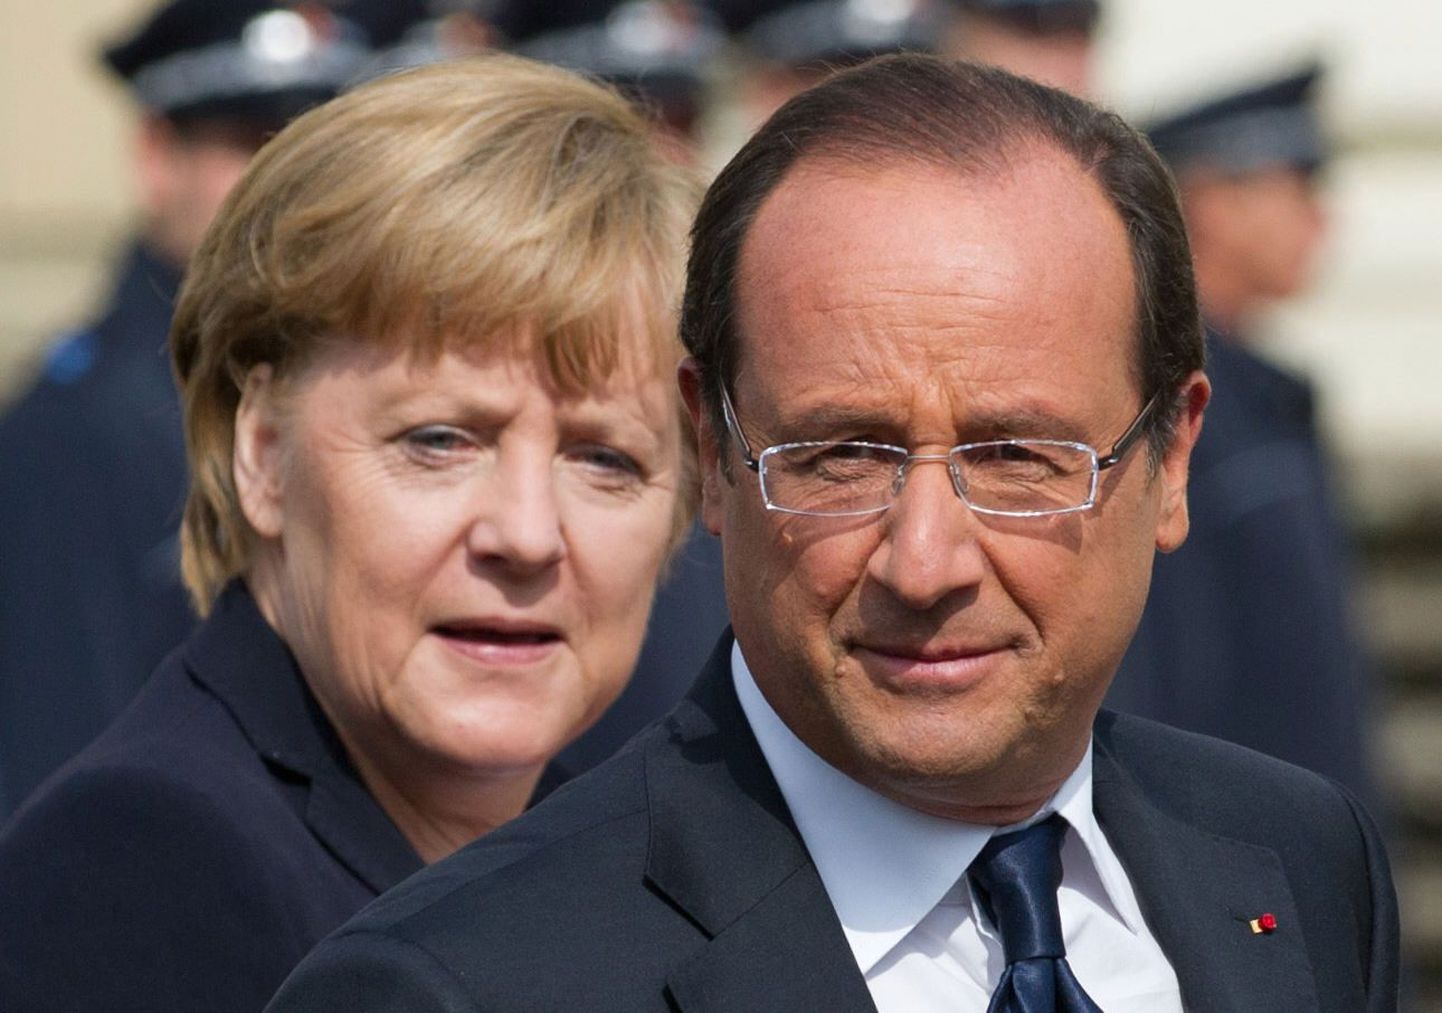 Saksa kantsler Angela Merkel ja Prantsuse president François Hollande.